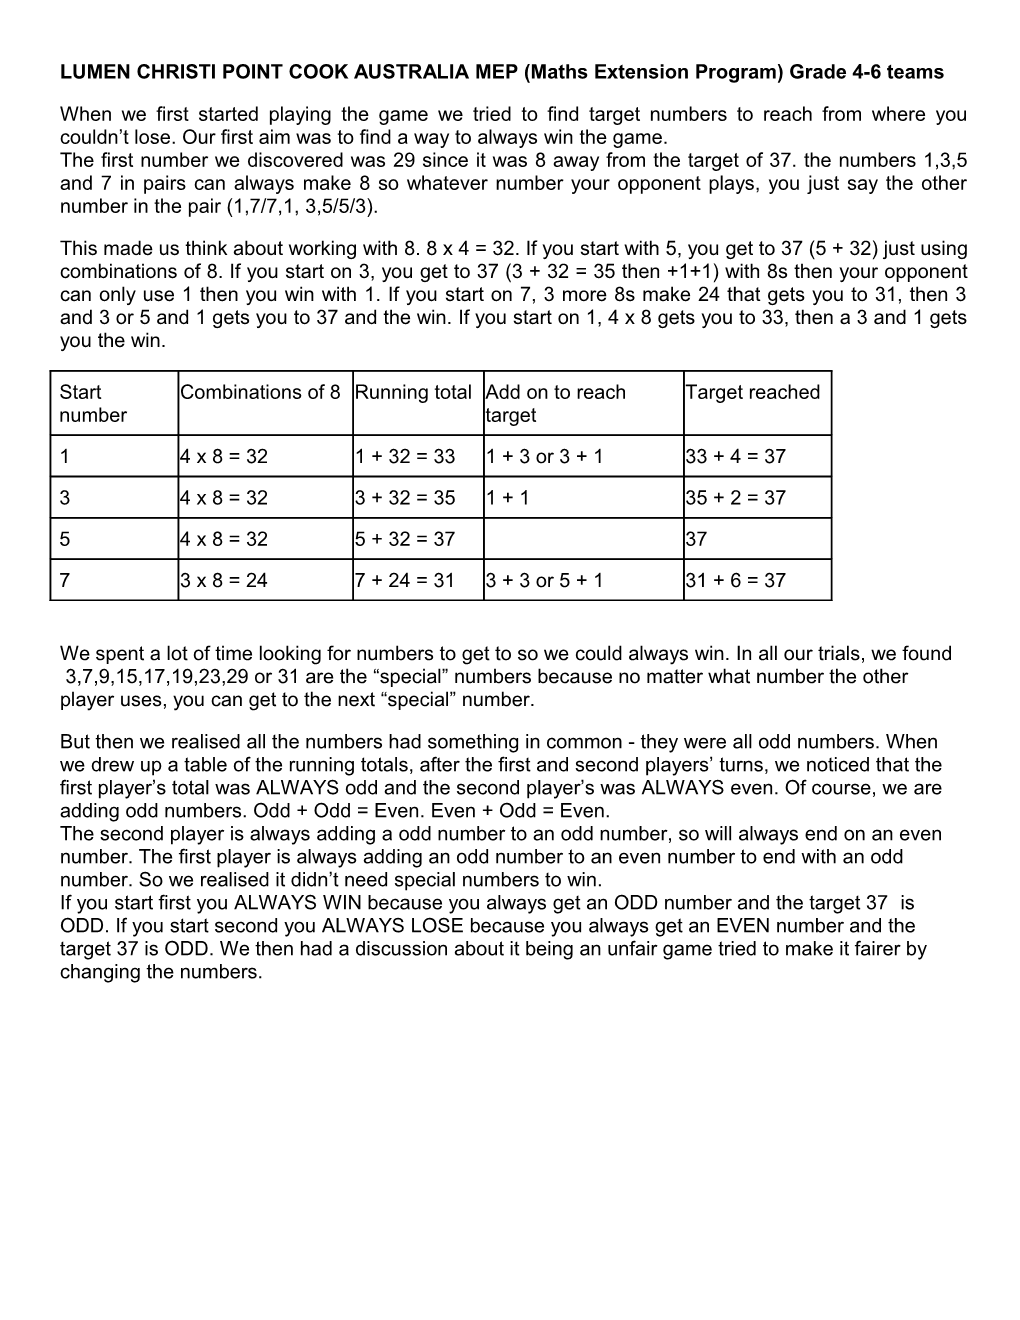 LUMEN CHRISTI POINT COOK AUSTRALIA MEP (Maths Extension Program) Grade 4-6 Teams